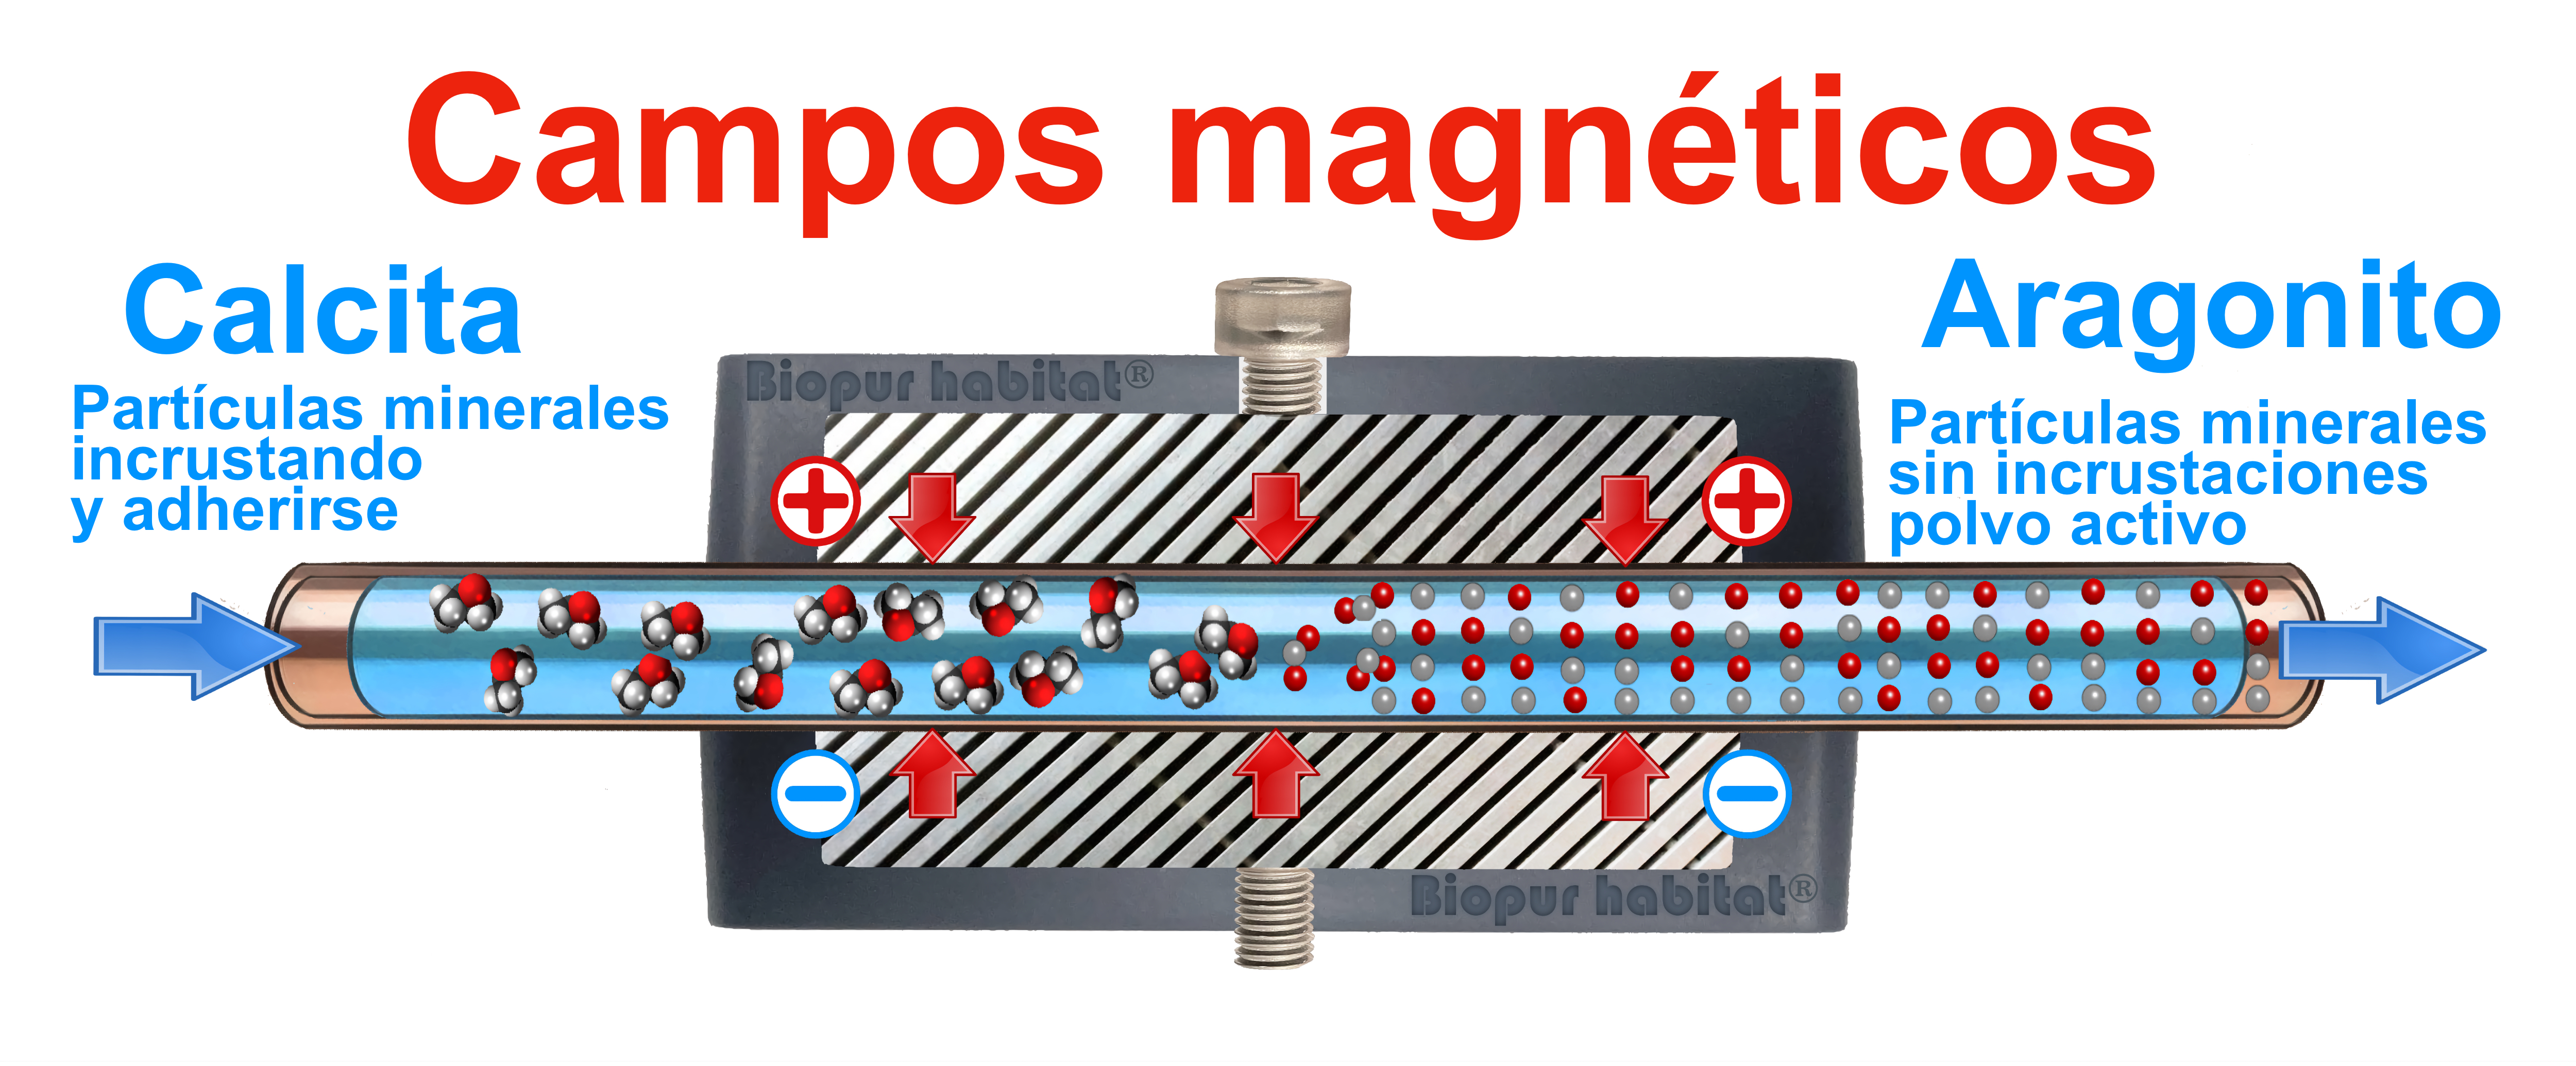 Descalcificador magnetico antical powermag 12800 gauss